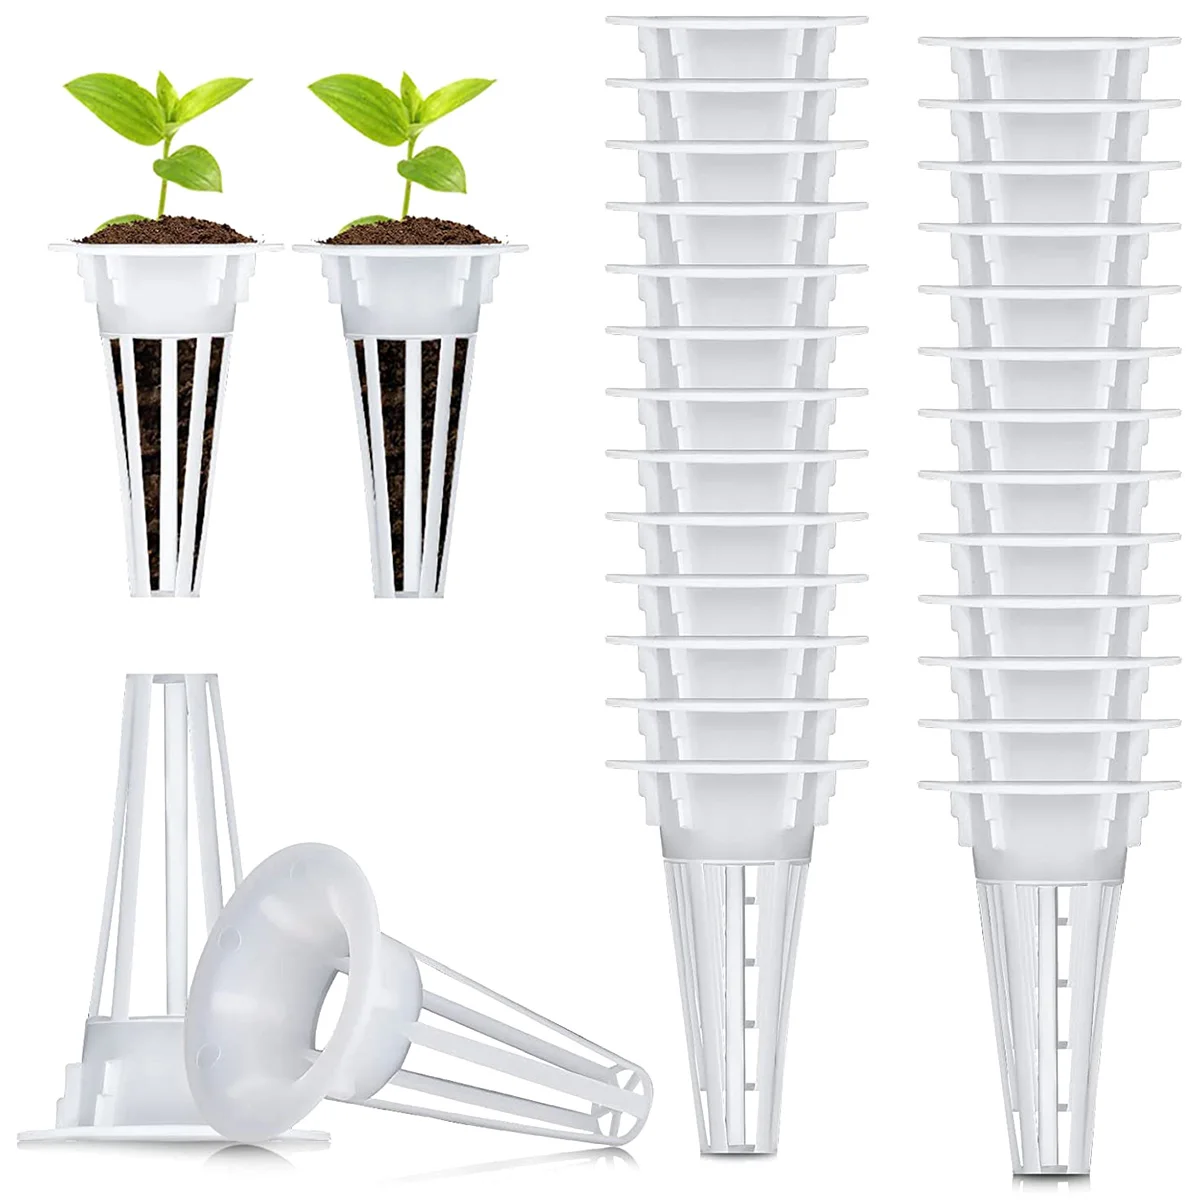 

50pcs Grow Baskets Pod Plant Grow Pots Net Nursery Cup Hydroponic colonization Mesh plastic Basket holder